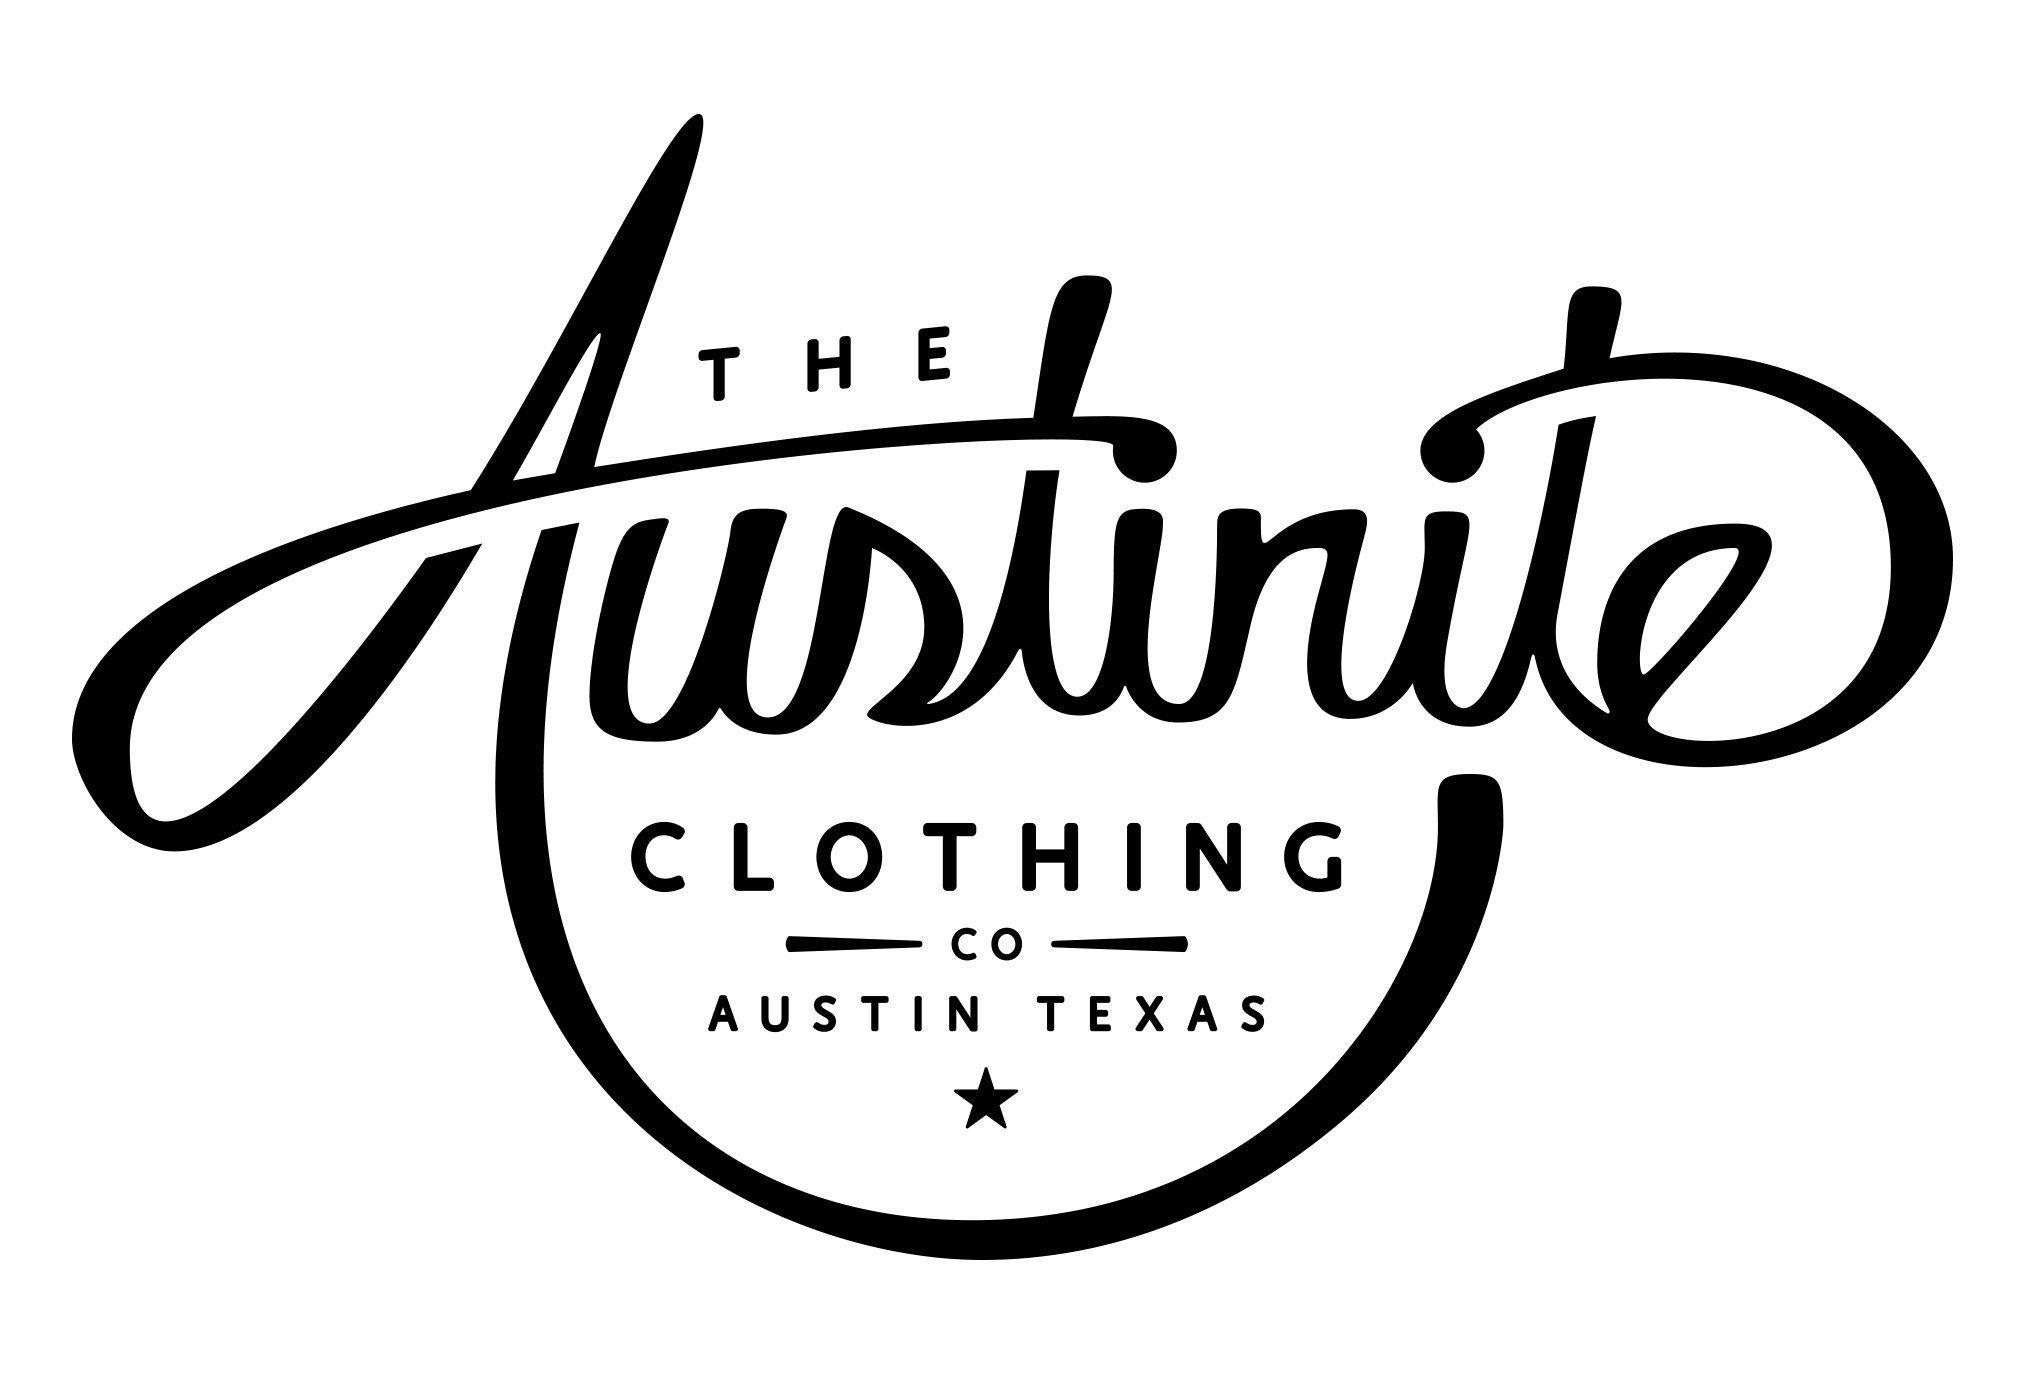 Clothing Company Logo - Austinite Clothing Co. - LIKE don't like the circle at the bottom ...